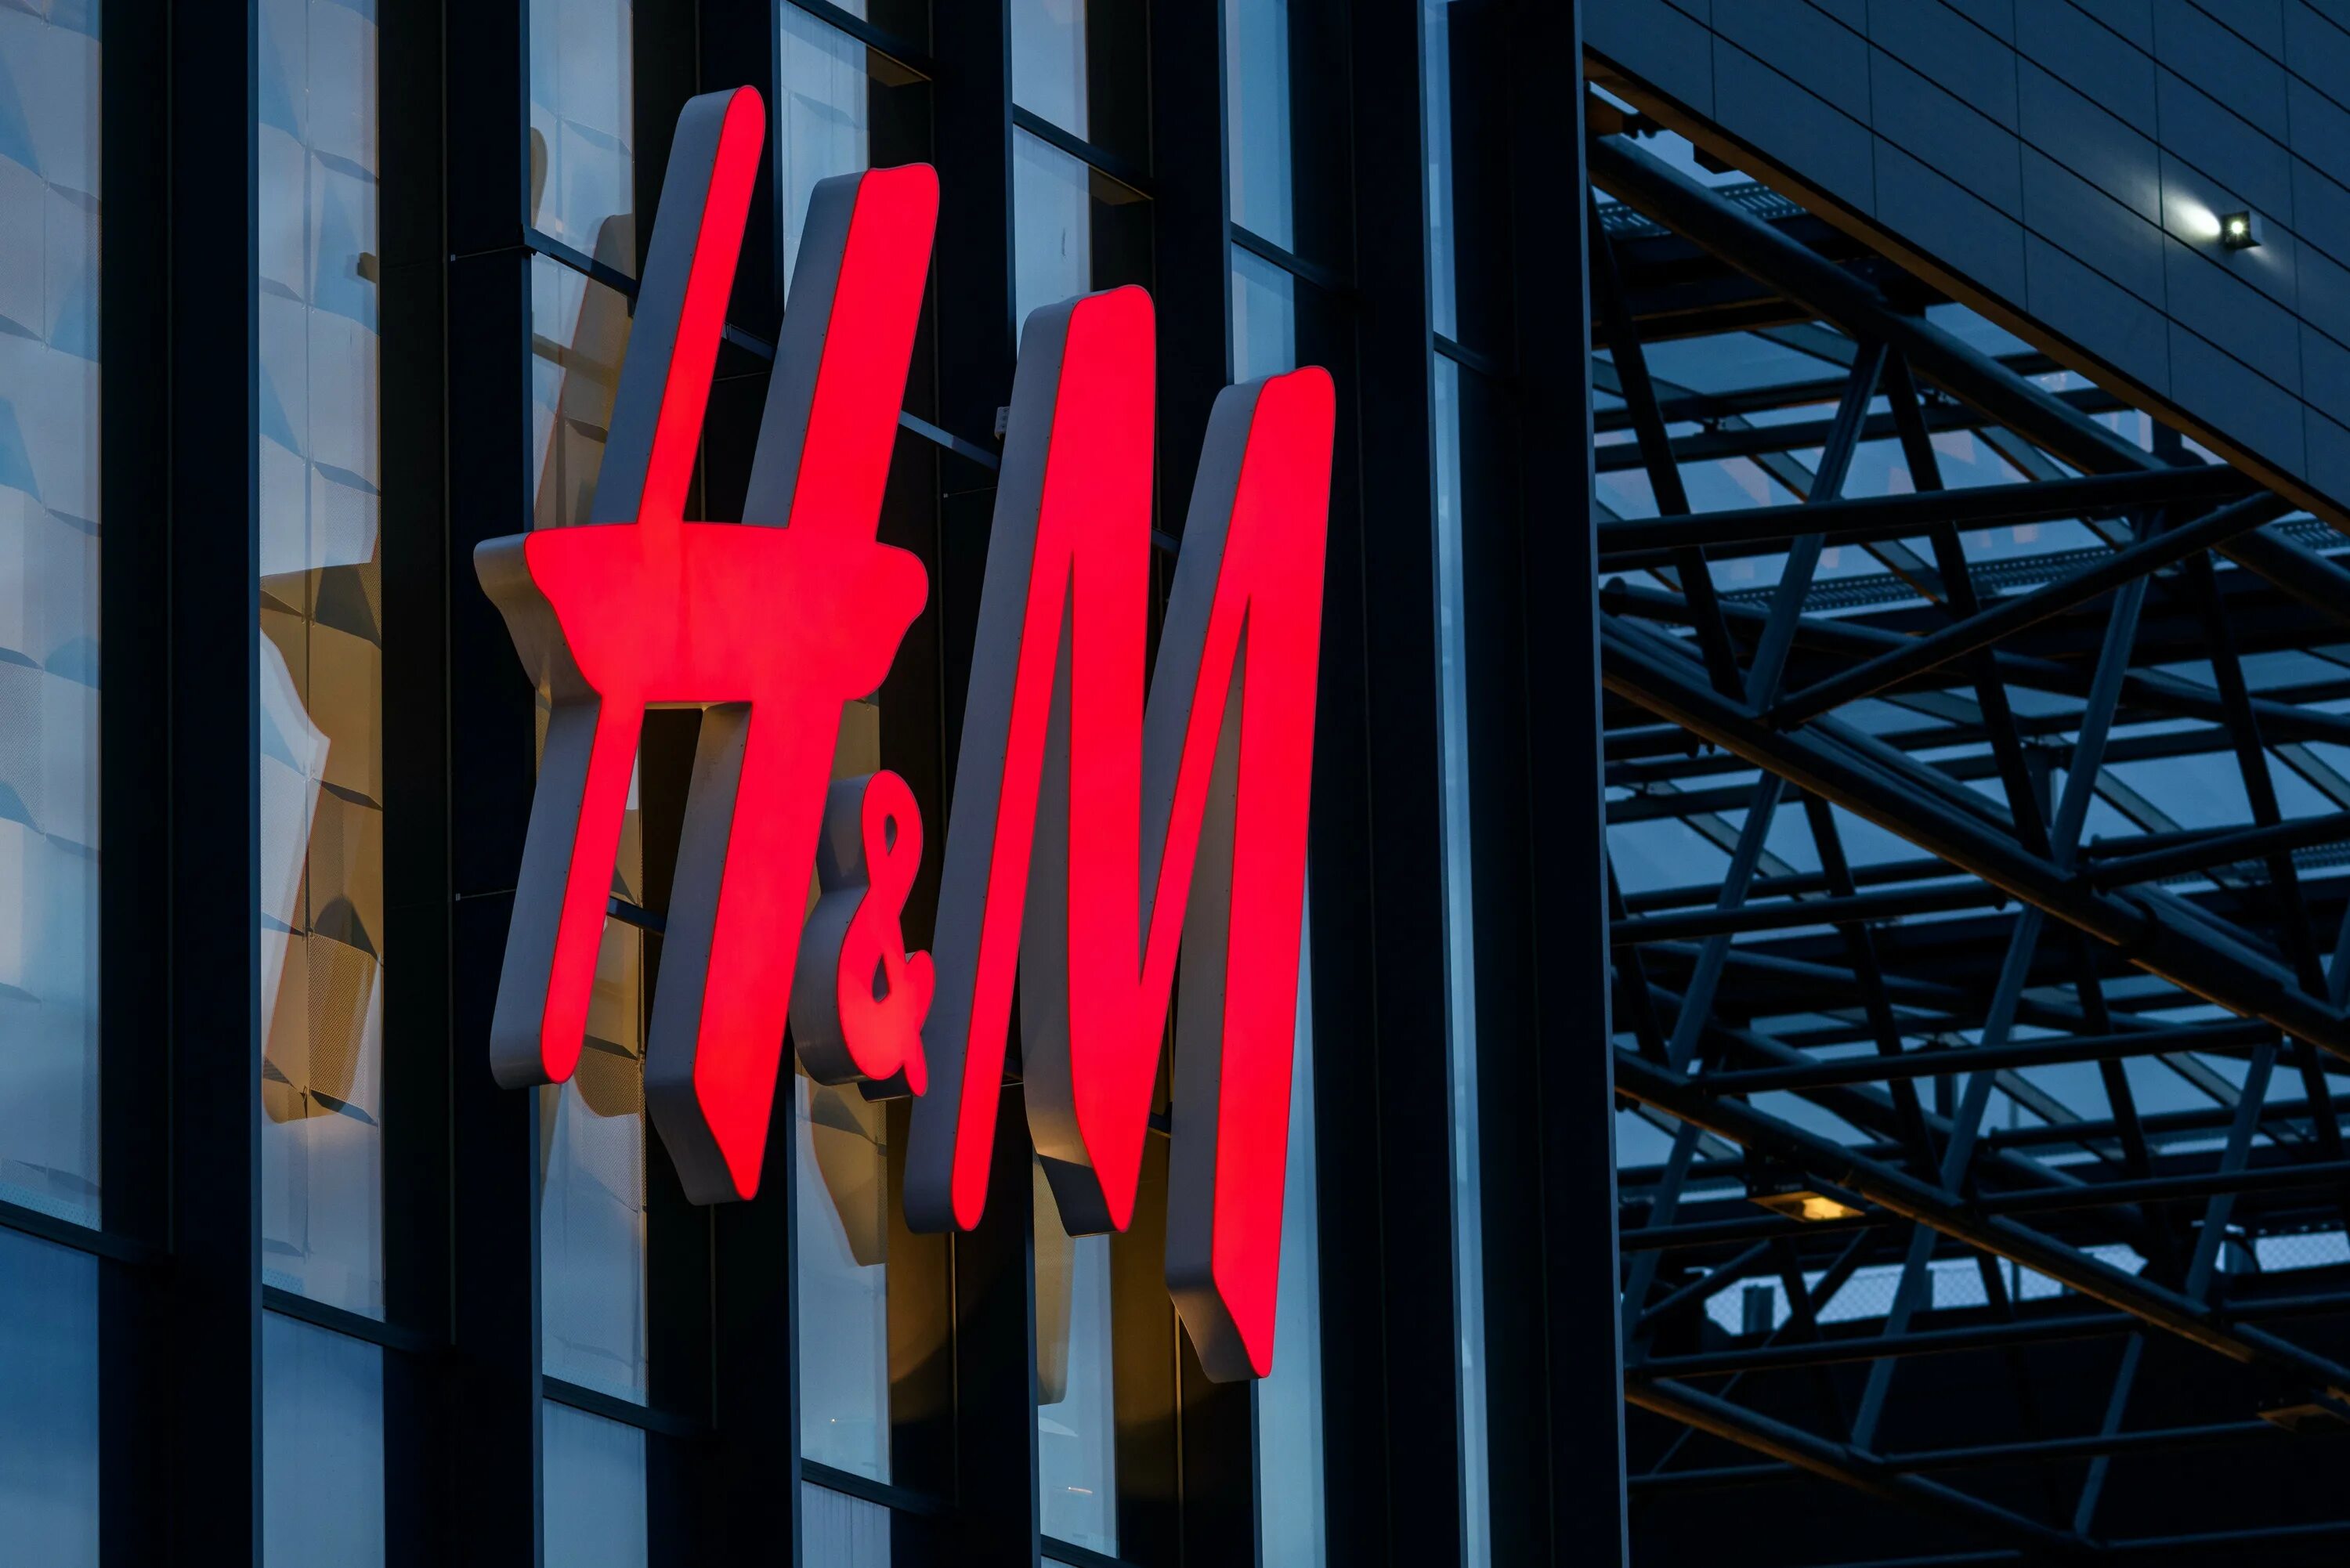 H m t. H&M. Вывеска h m. Шведские компании h&m. Компания h m логотип.